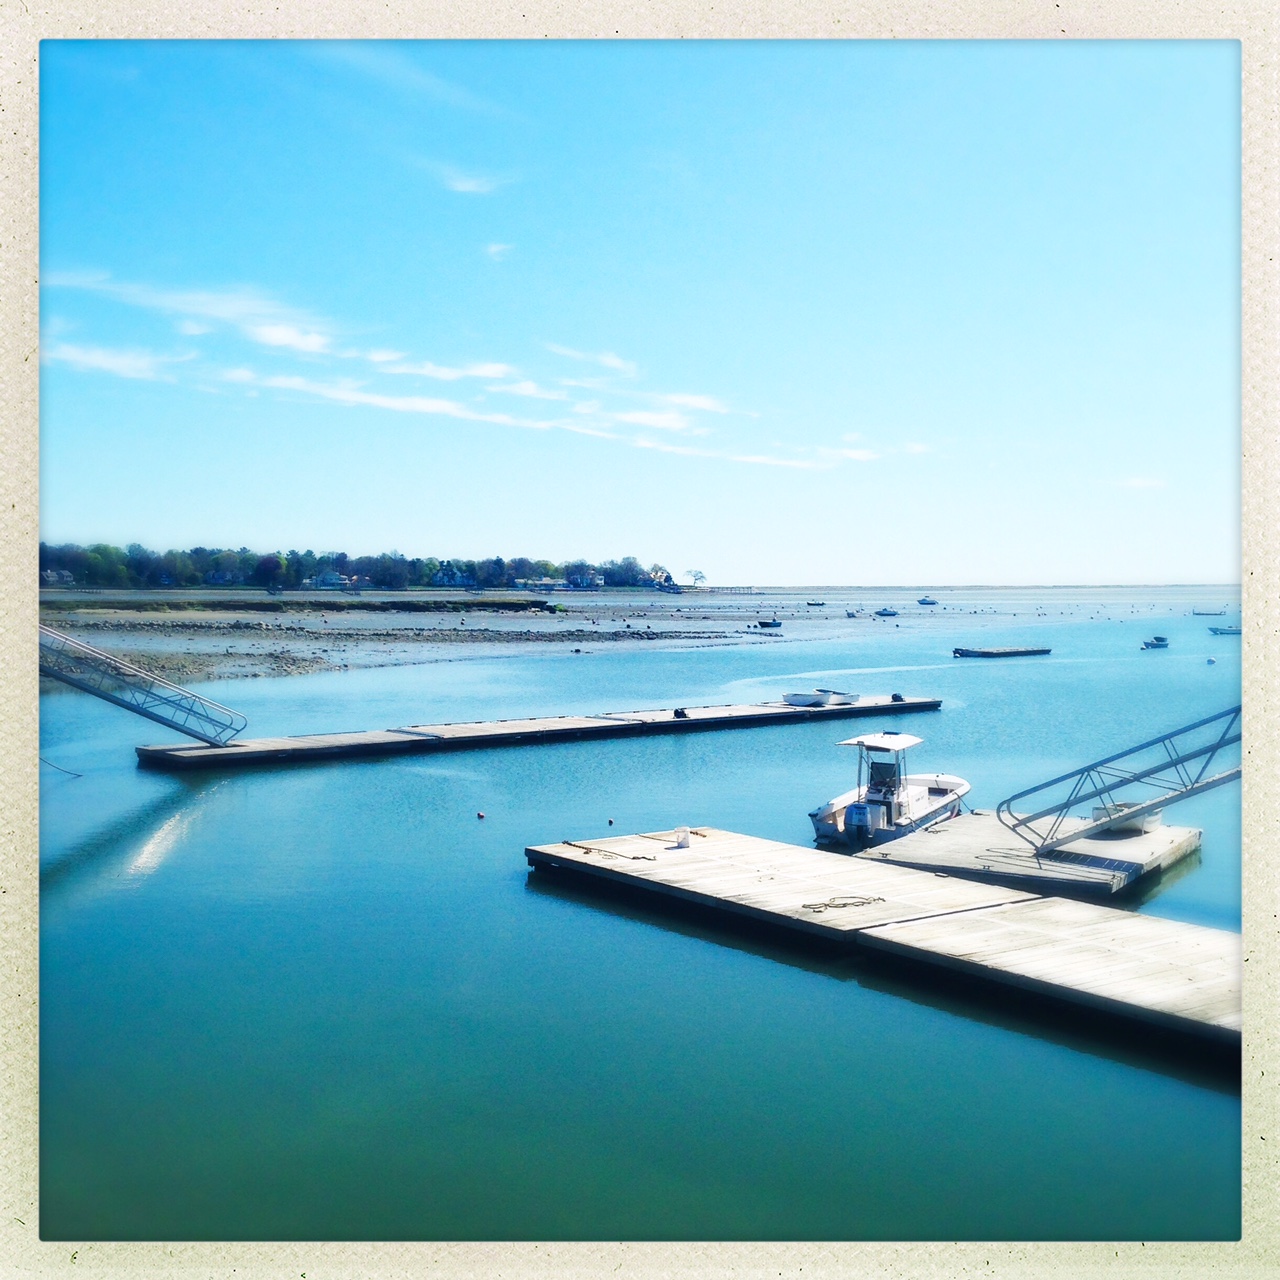  duxbury, massachussetts. duxbury bay, floating docks, spring. 